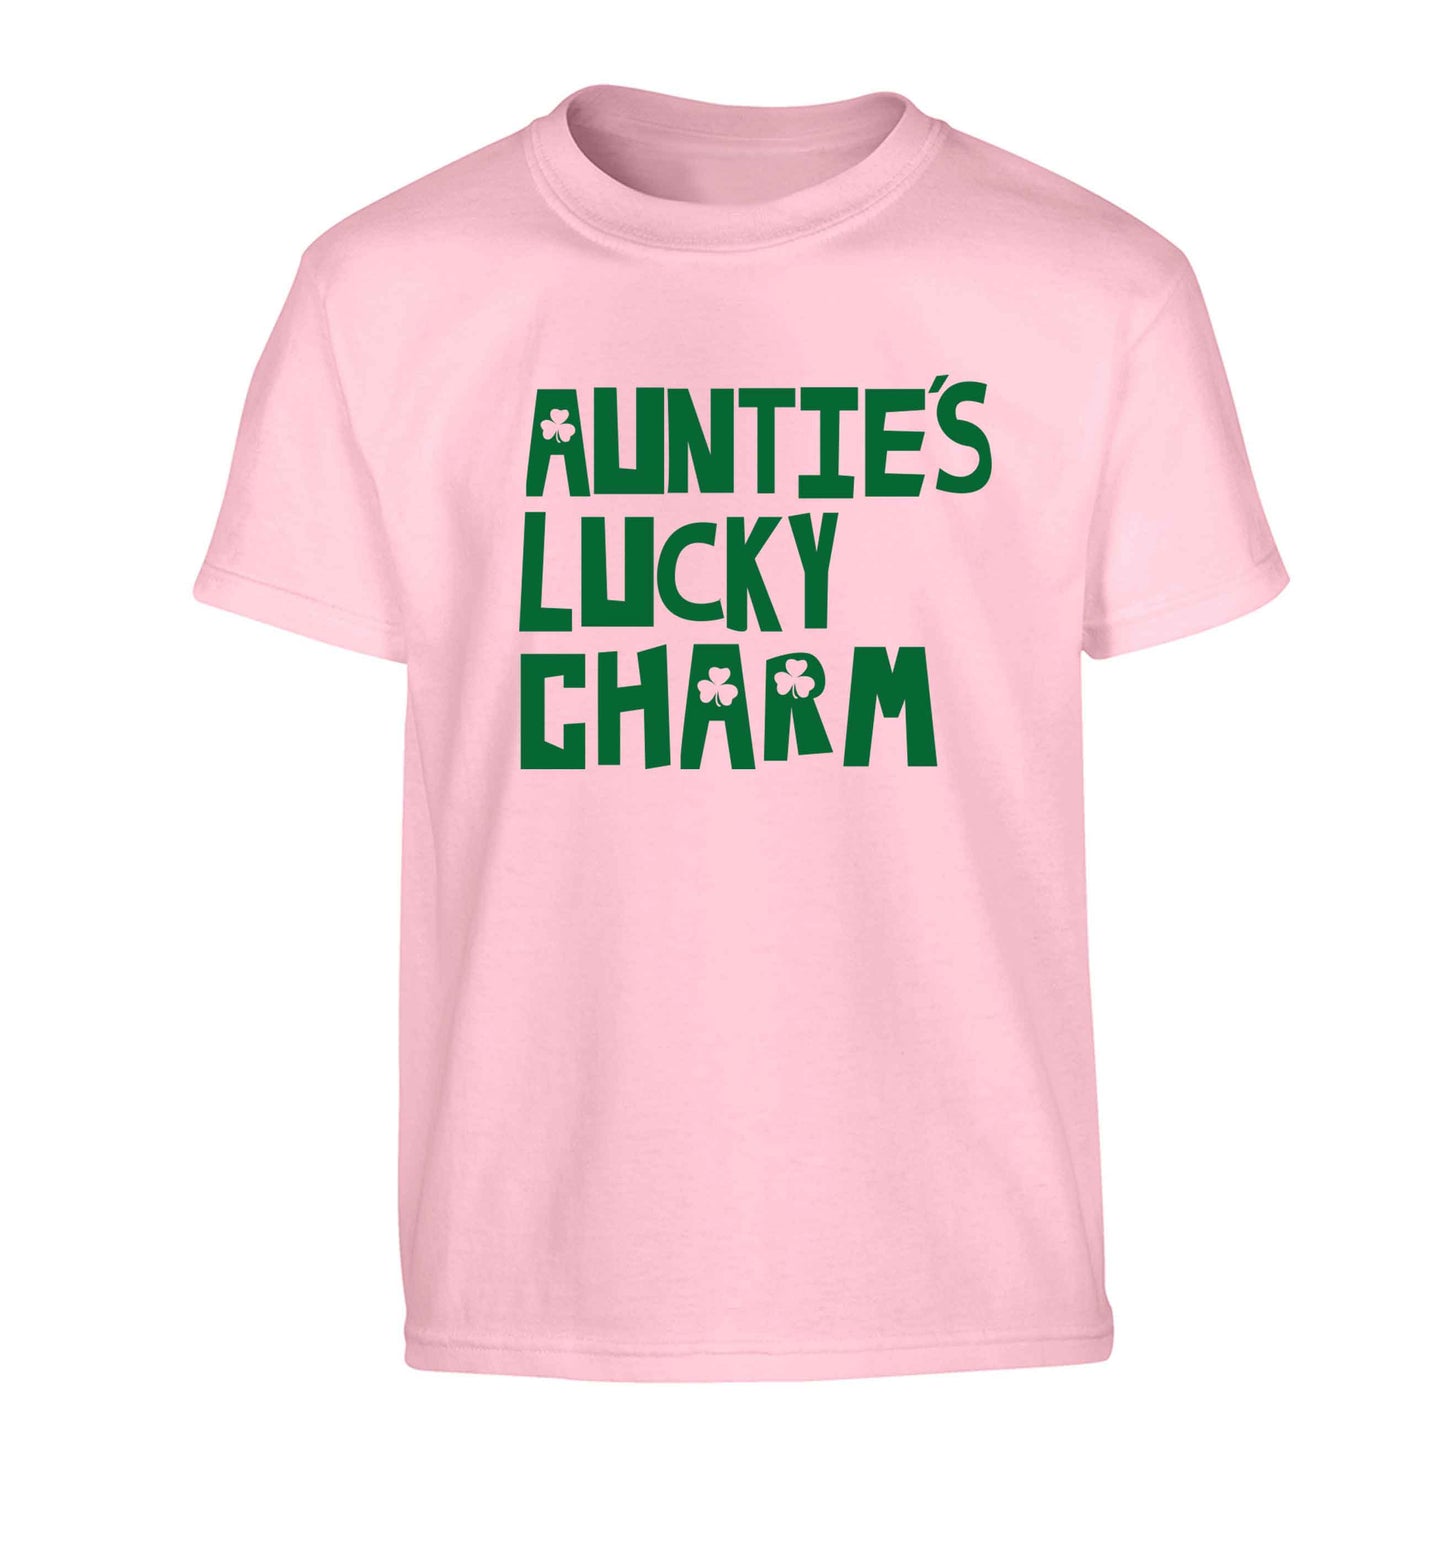 Auntie's lucky charm Children's light pink Tshirt 12-13 Years